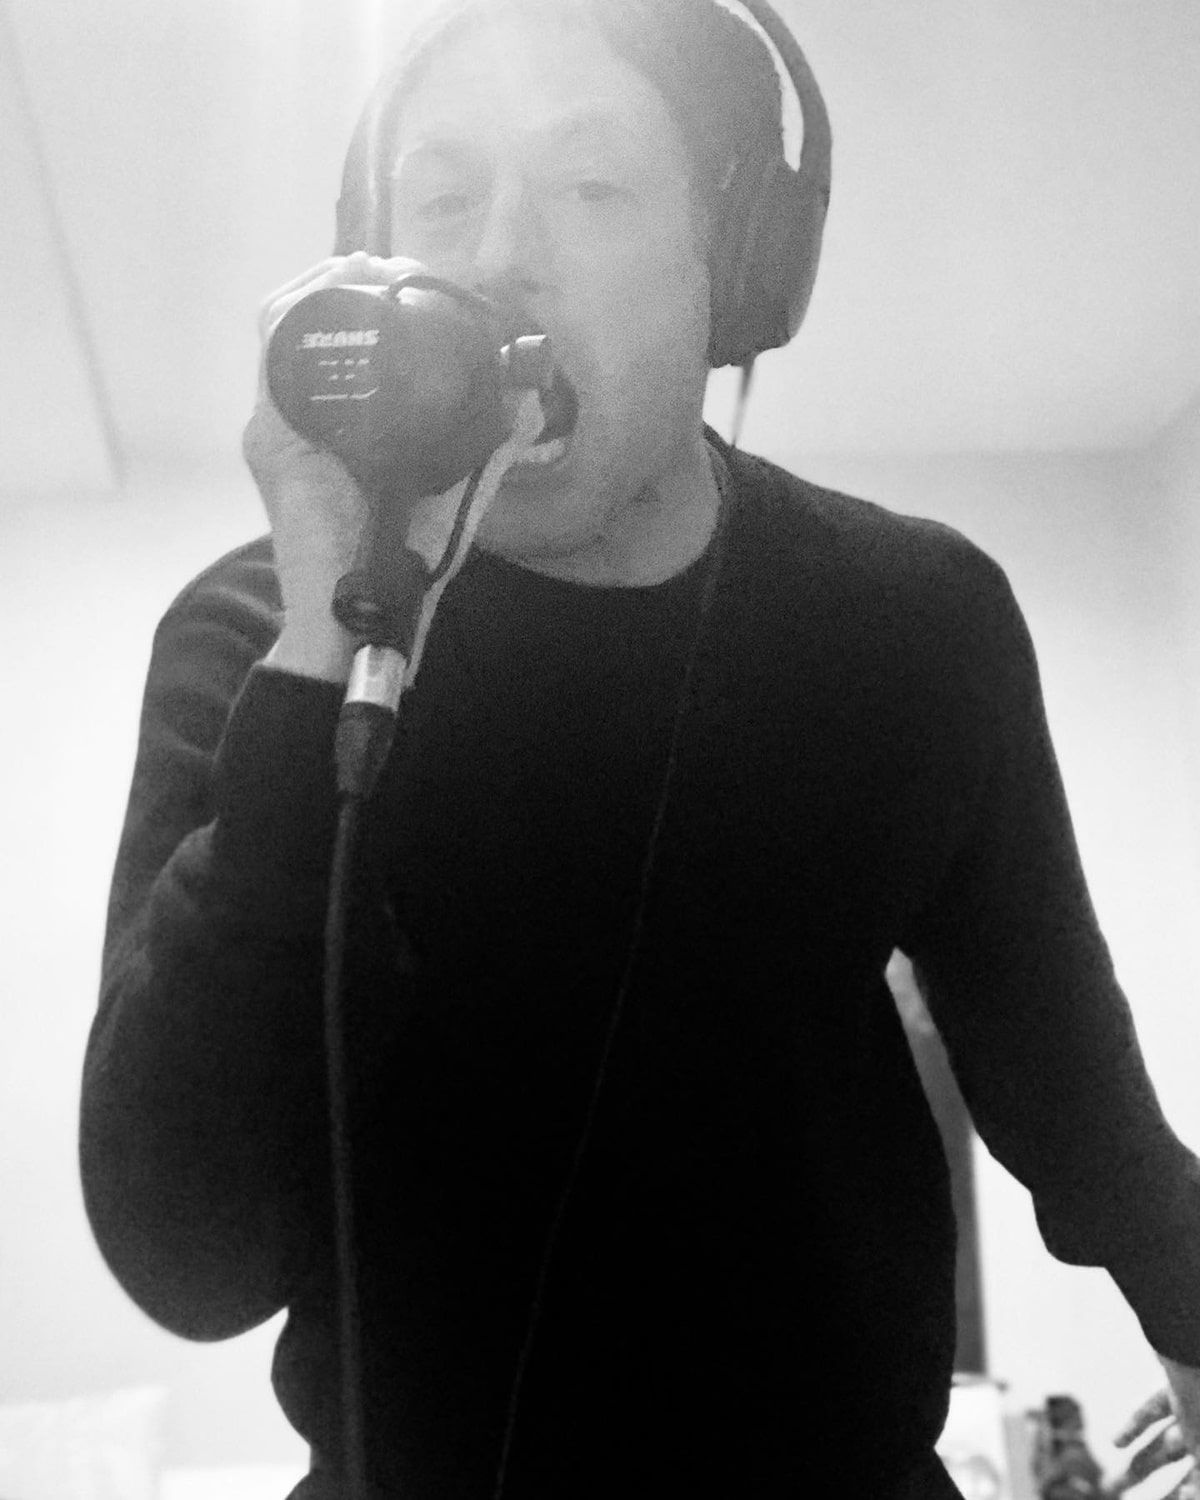 Chris recording